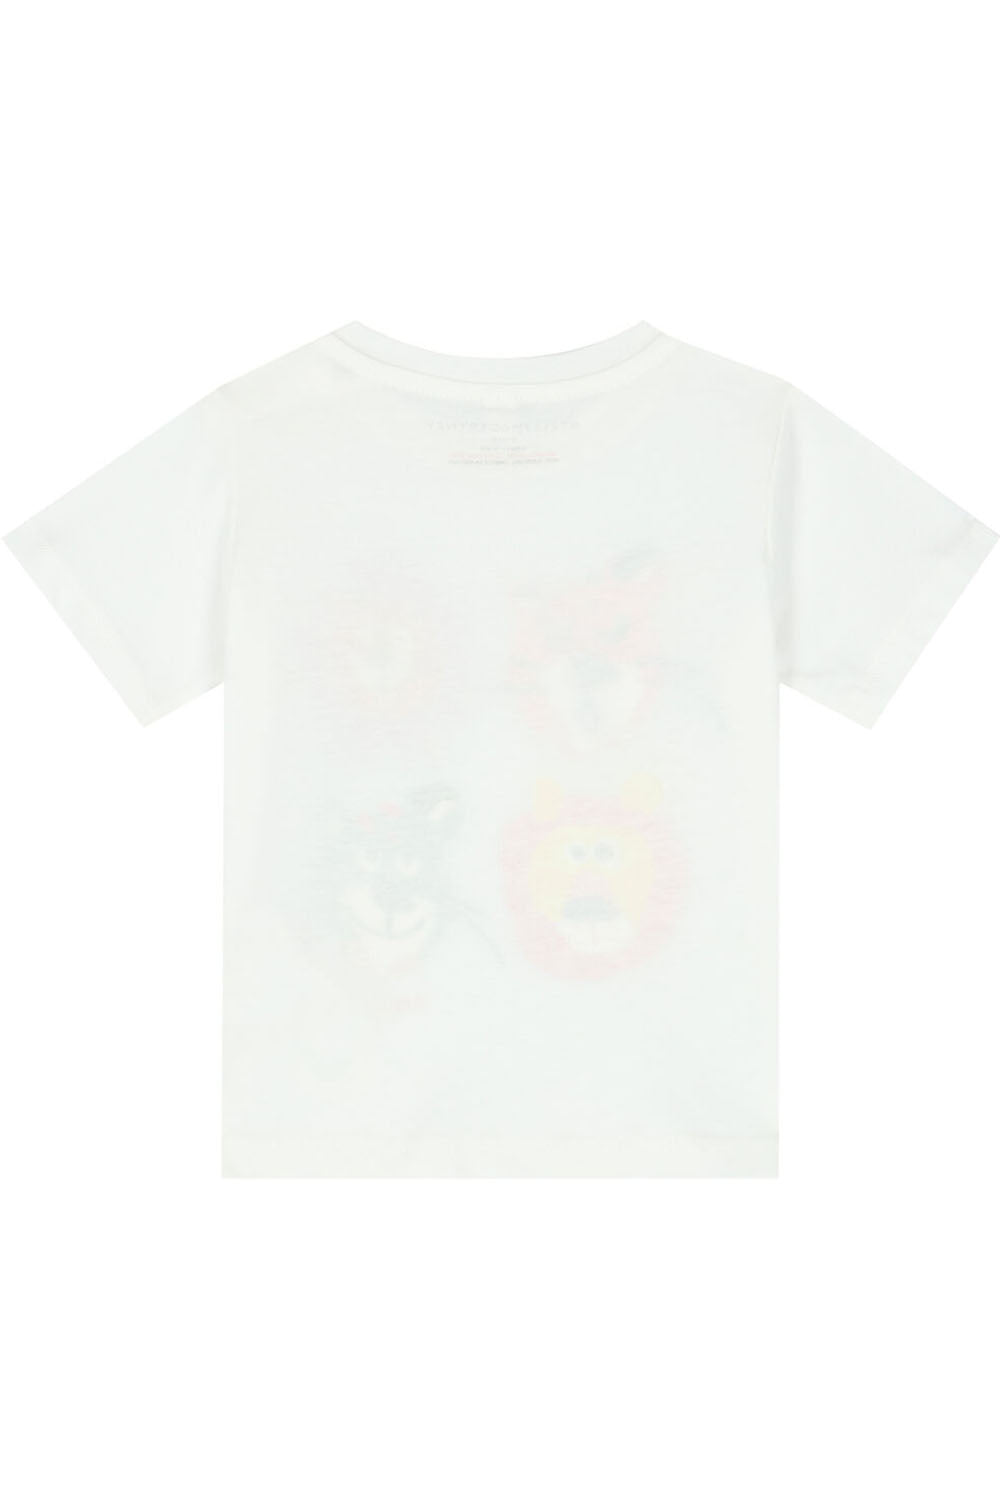 Baby Multi Face T Shirt for Boys - Maison7